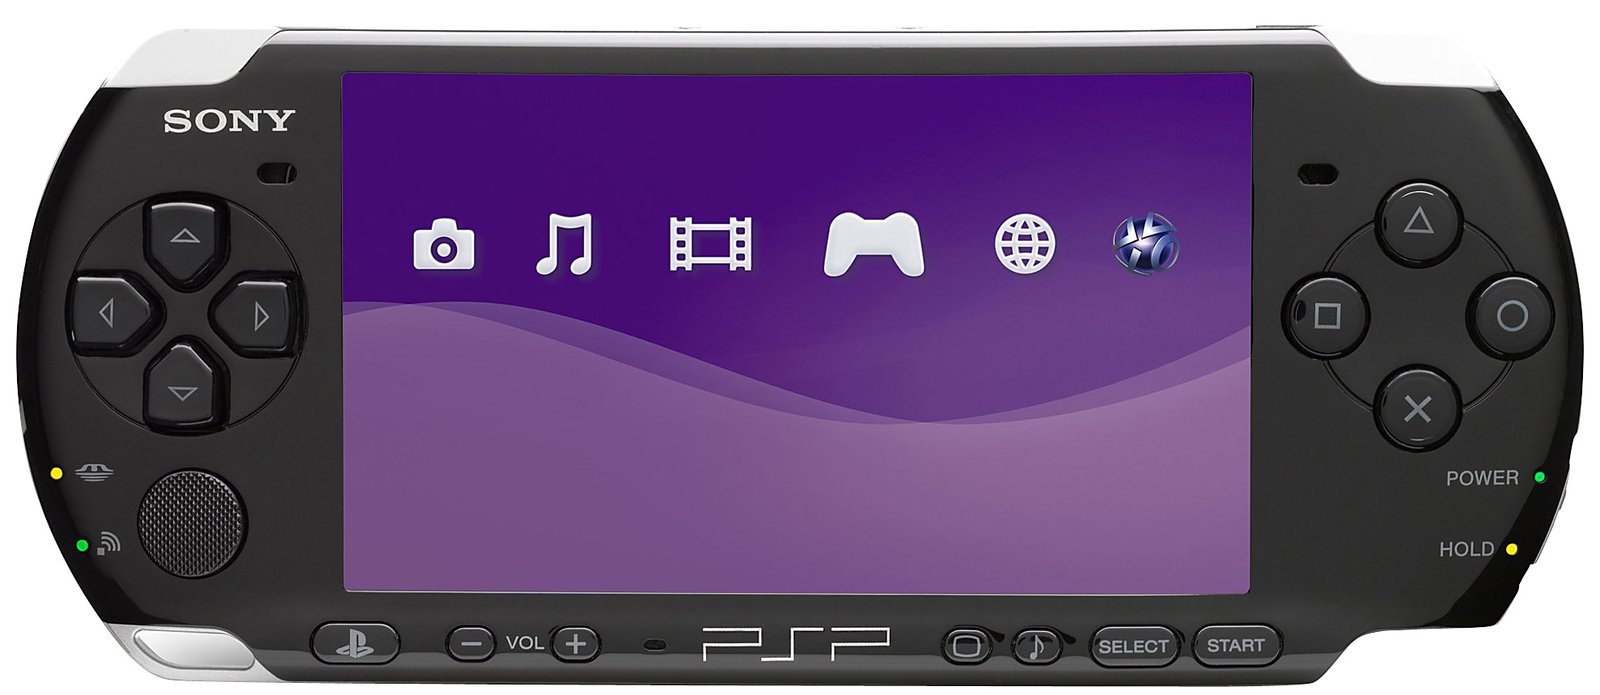 Игровая приставка найти. Sony PLAYSTATION Portable PSP 3000. Sony PLAYSTATION Portable (PSP-1008). Приставка игровая Sony PSP 5. Sony PLAYSTATION PSP e1004.